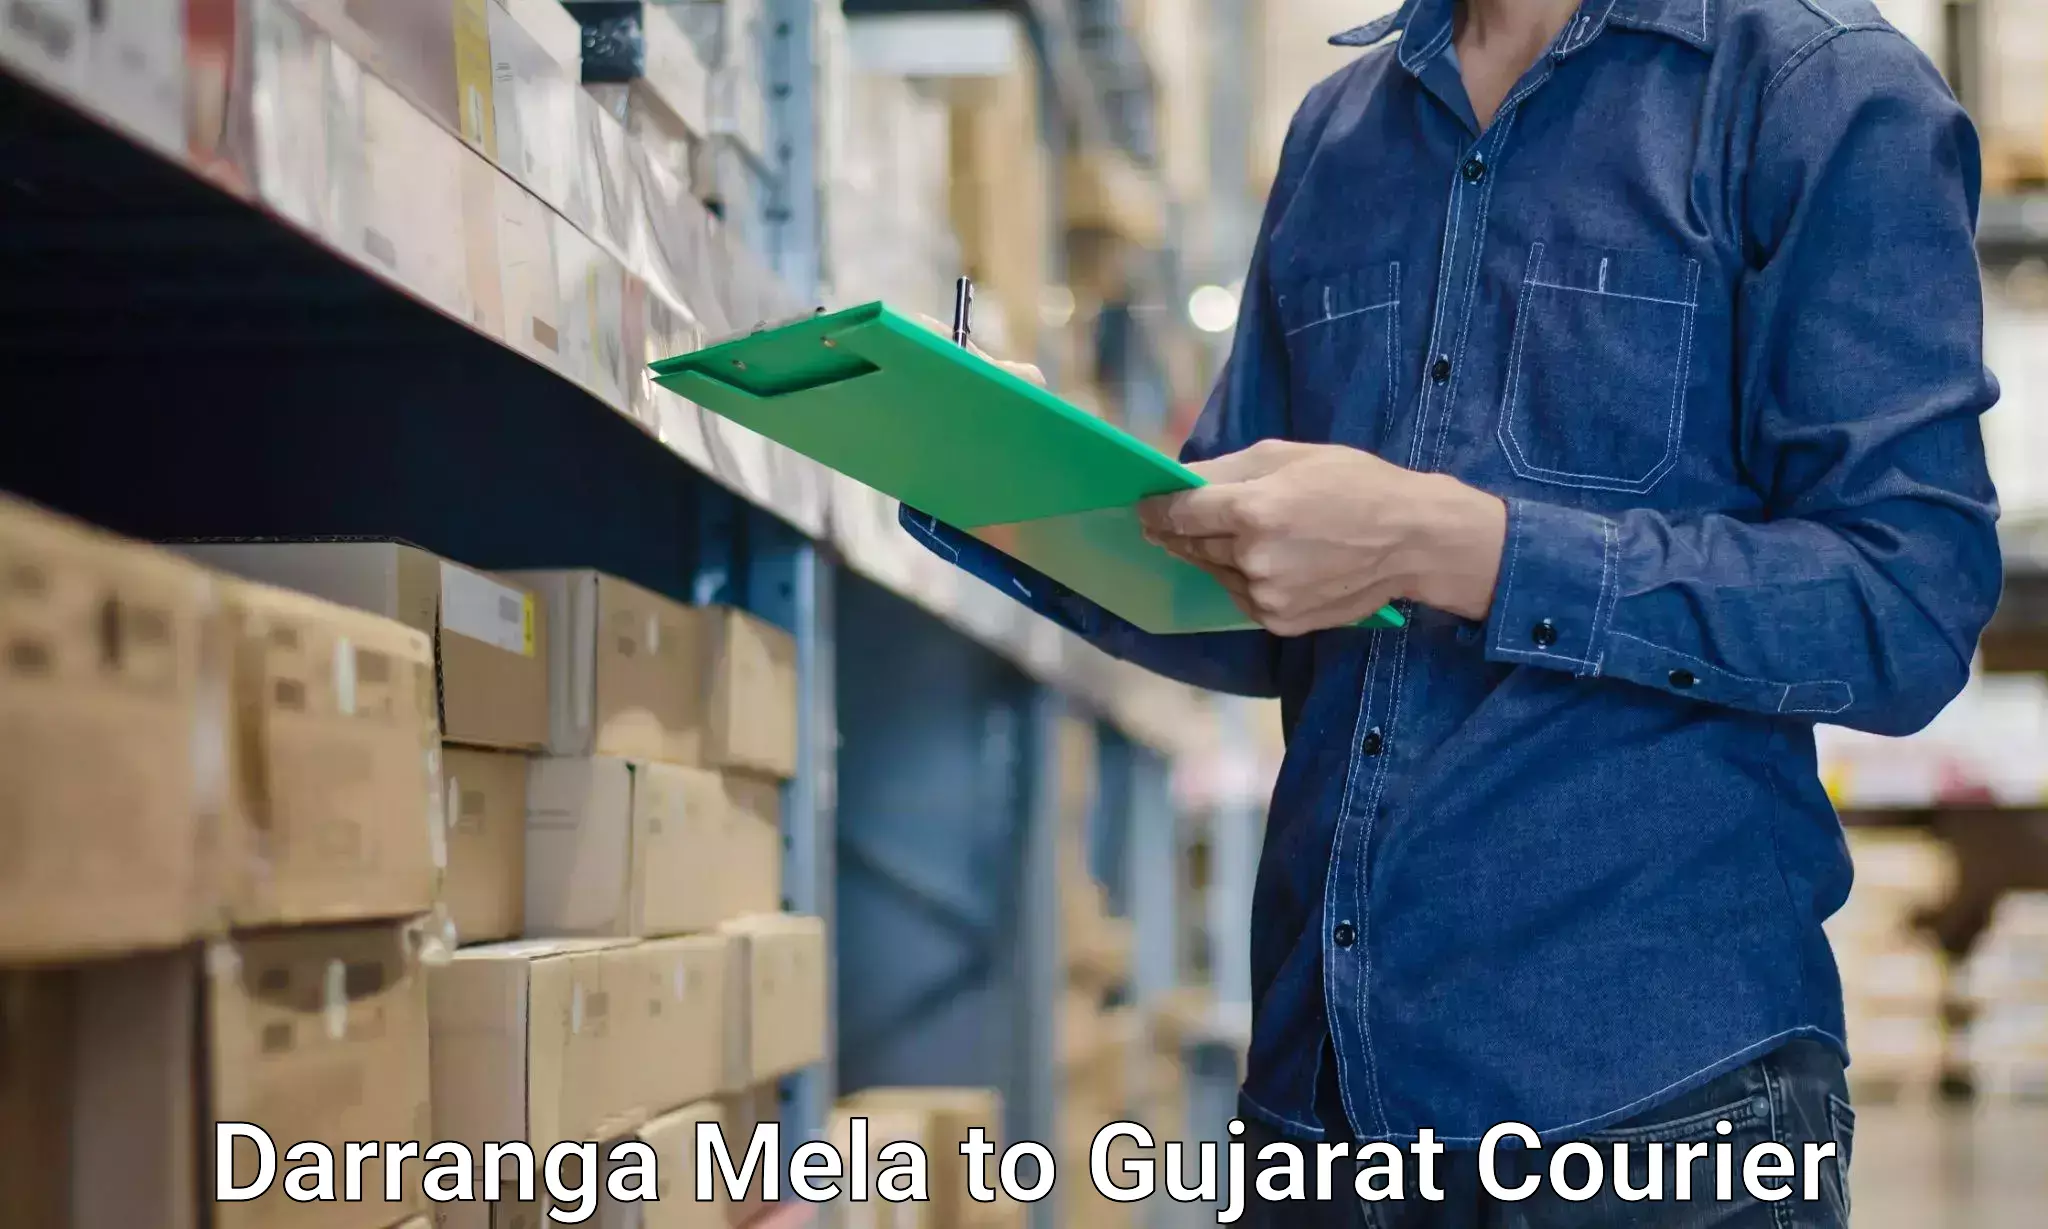 Moving and handling services Darranga Mela to Jhagadia